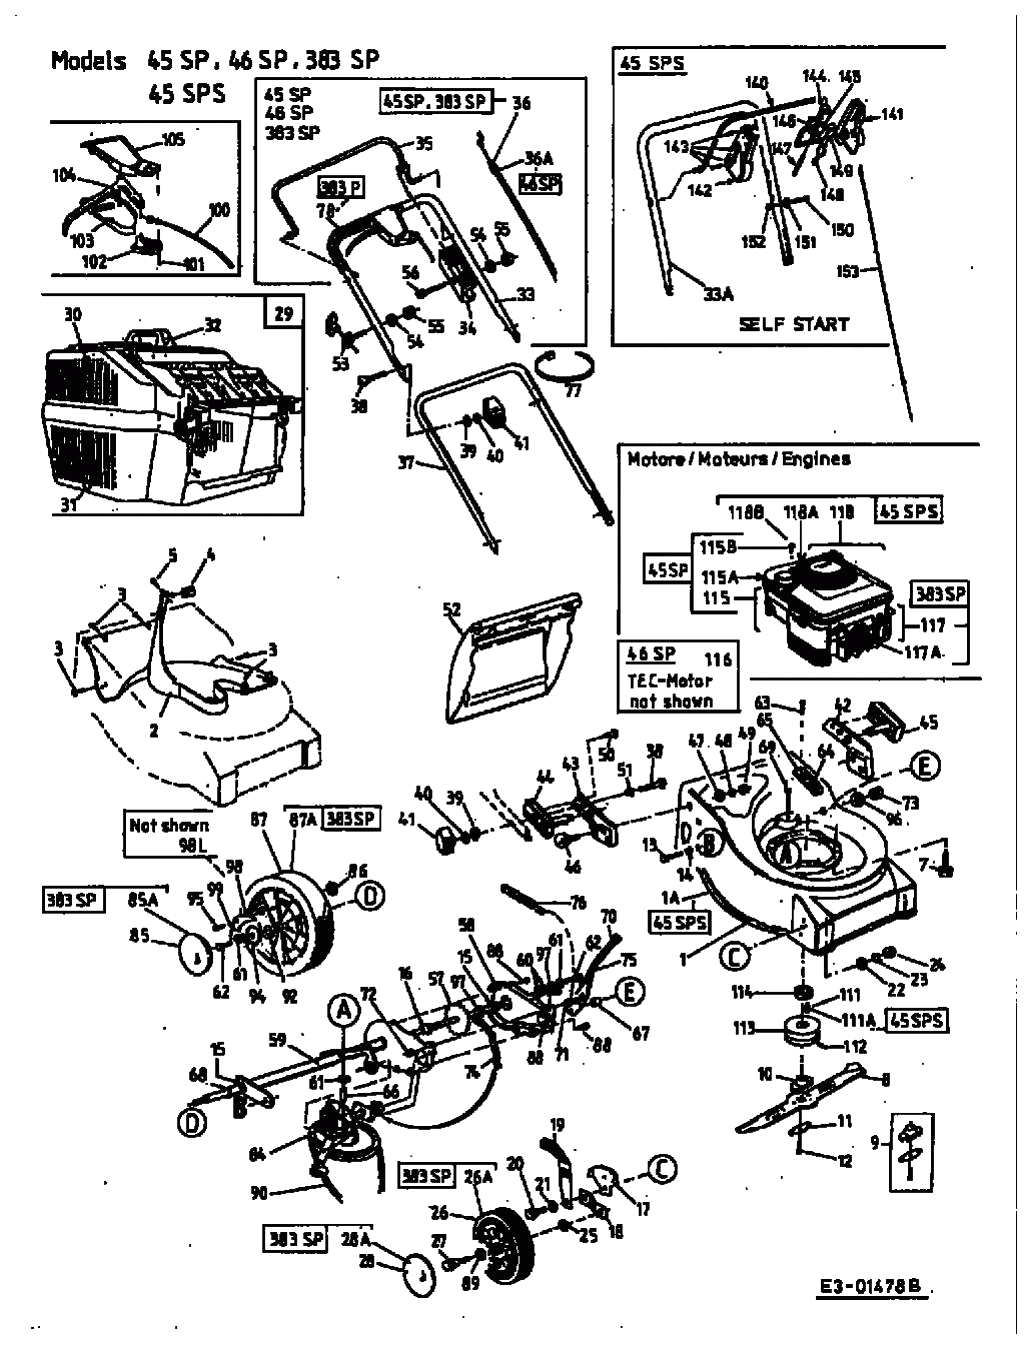 MTD Артикул 12A-613A600 (год выпуска 2002). Основная деталировка